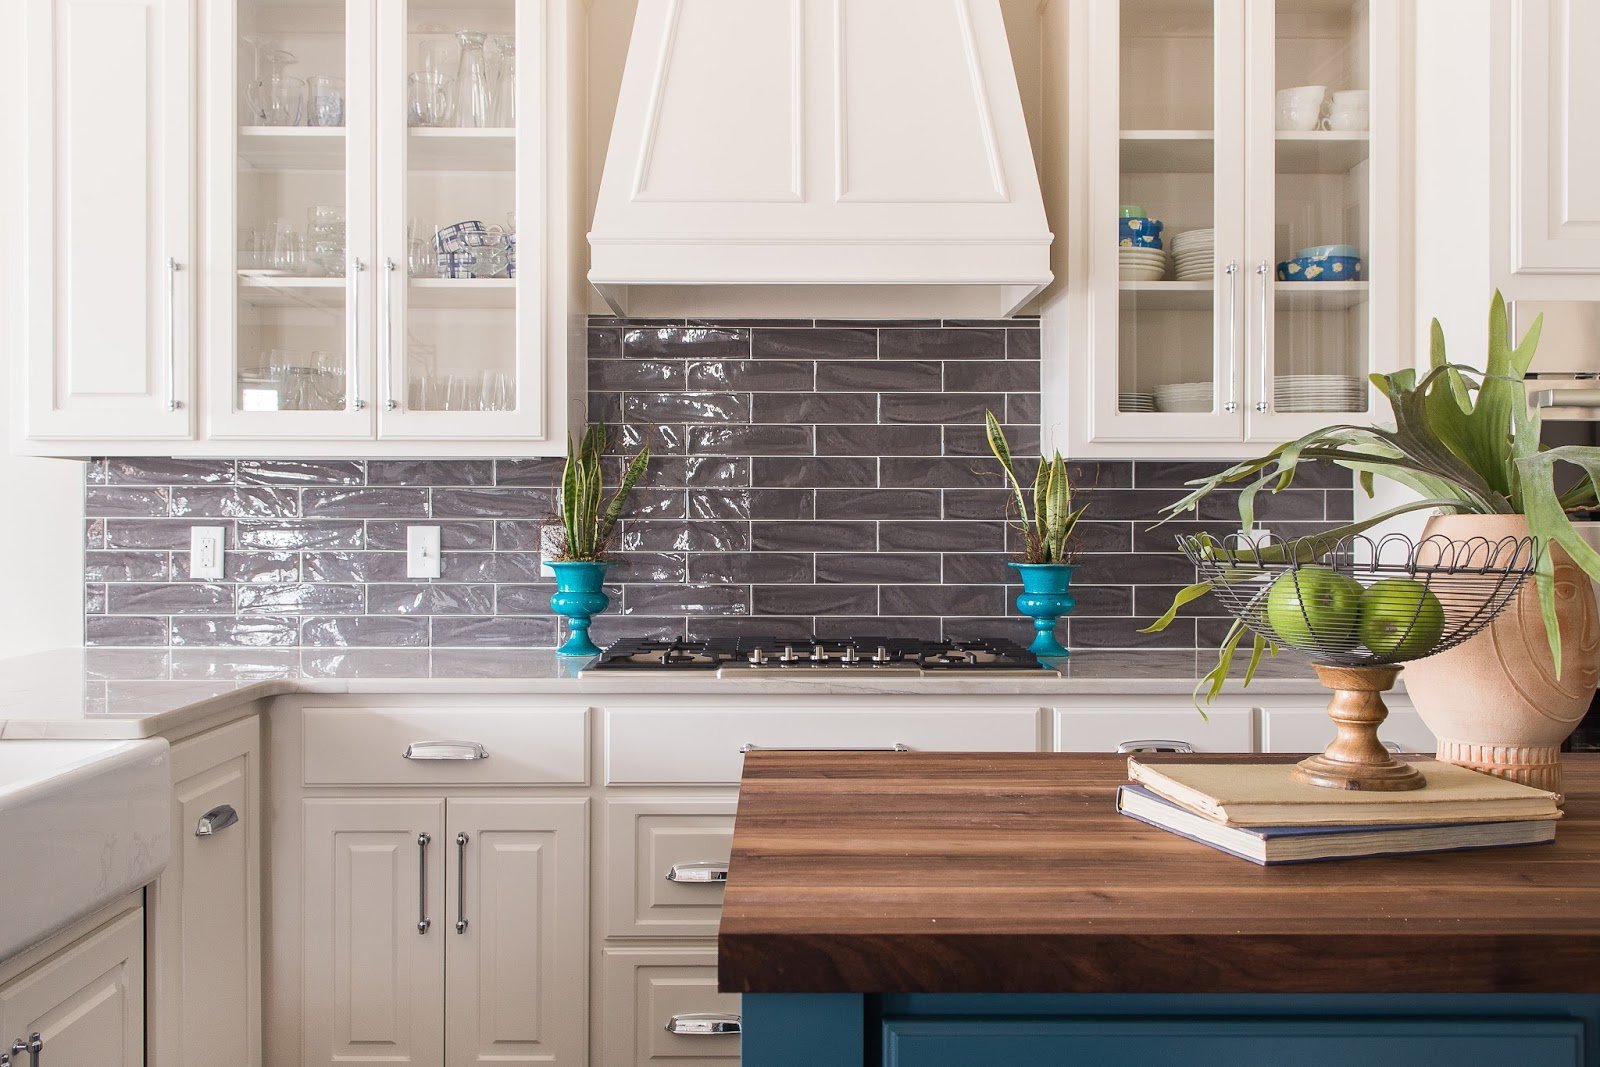 Shoji White kitchen cabinets with dark gray backsplash